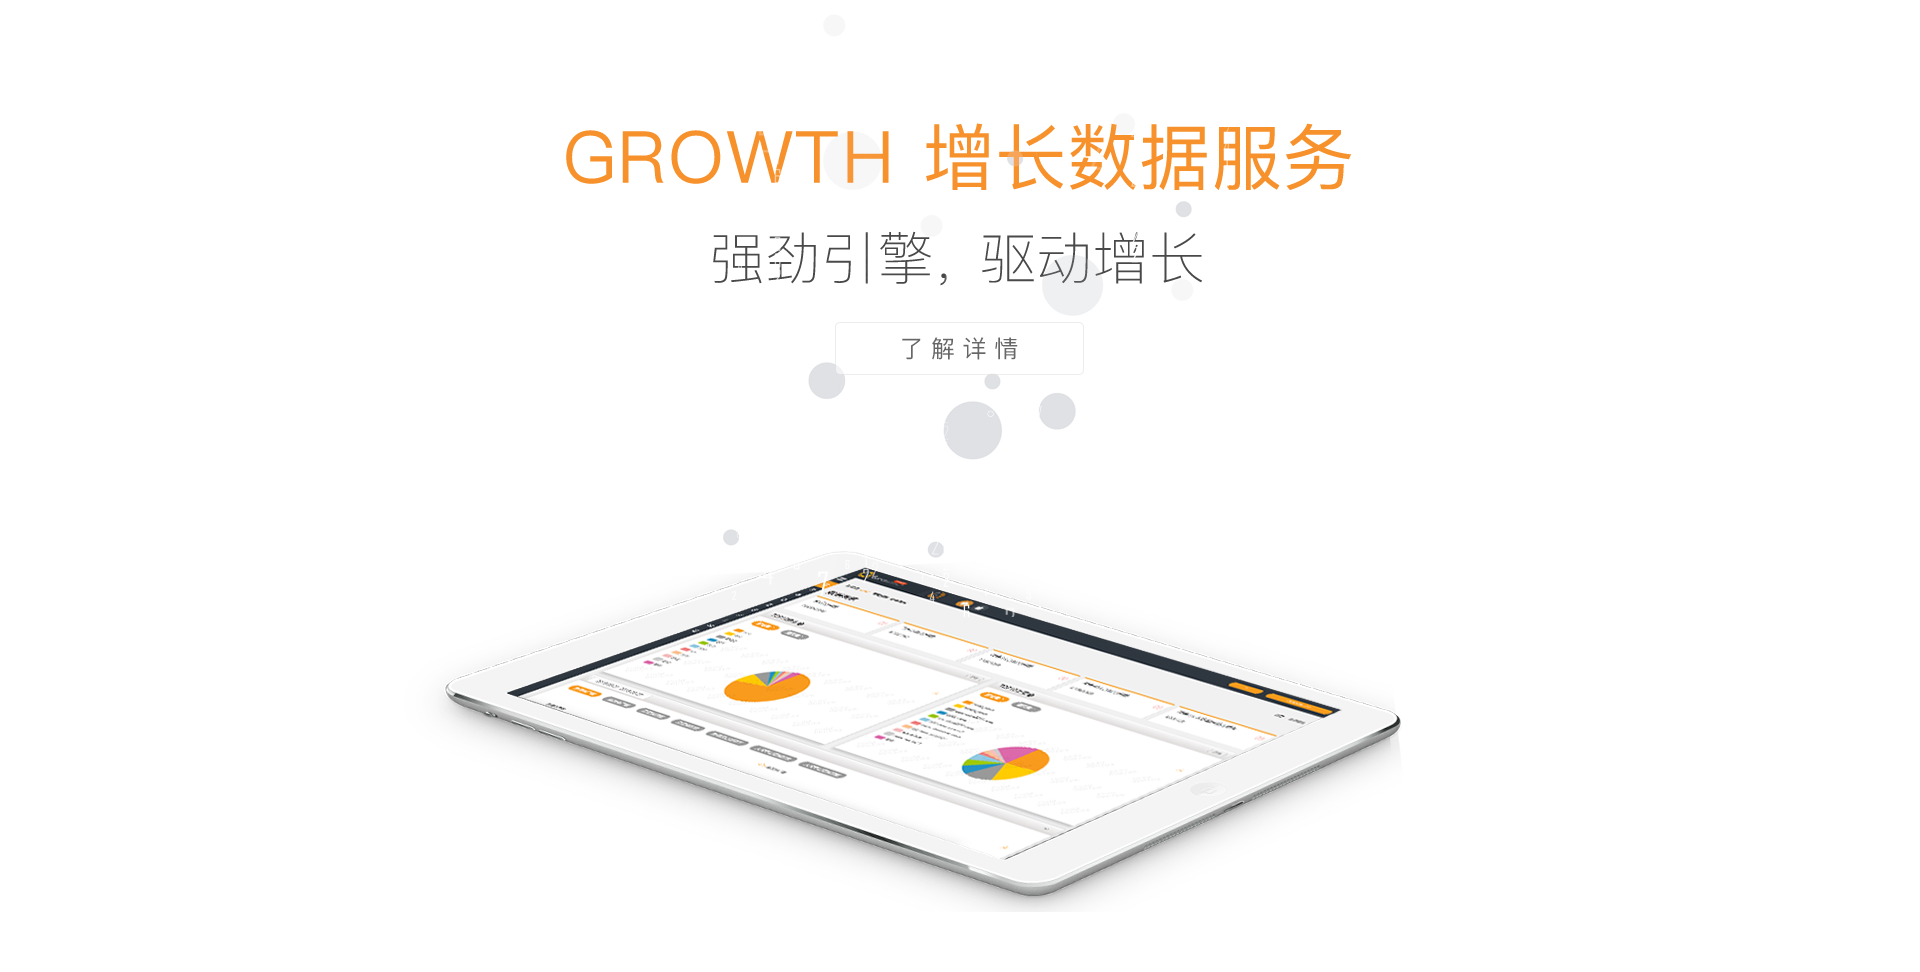 GROWTH 增长数据服务